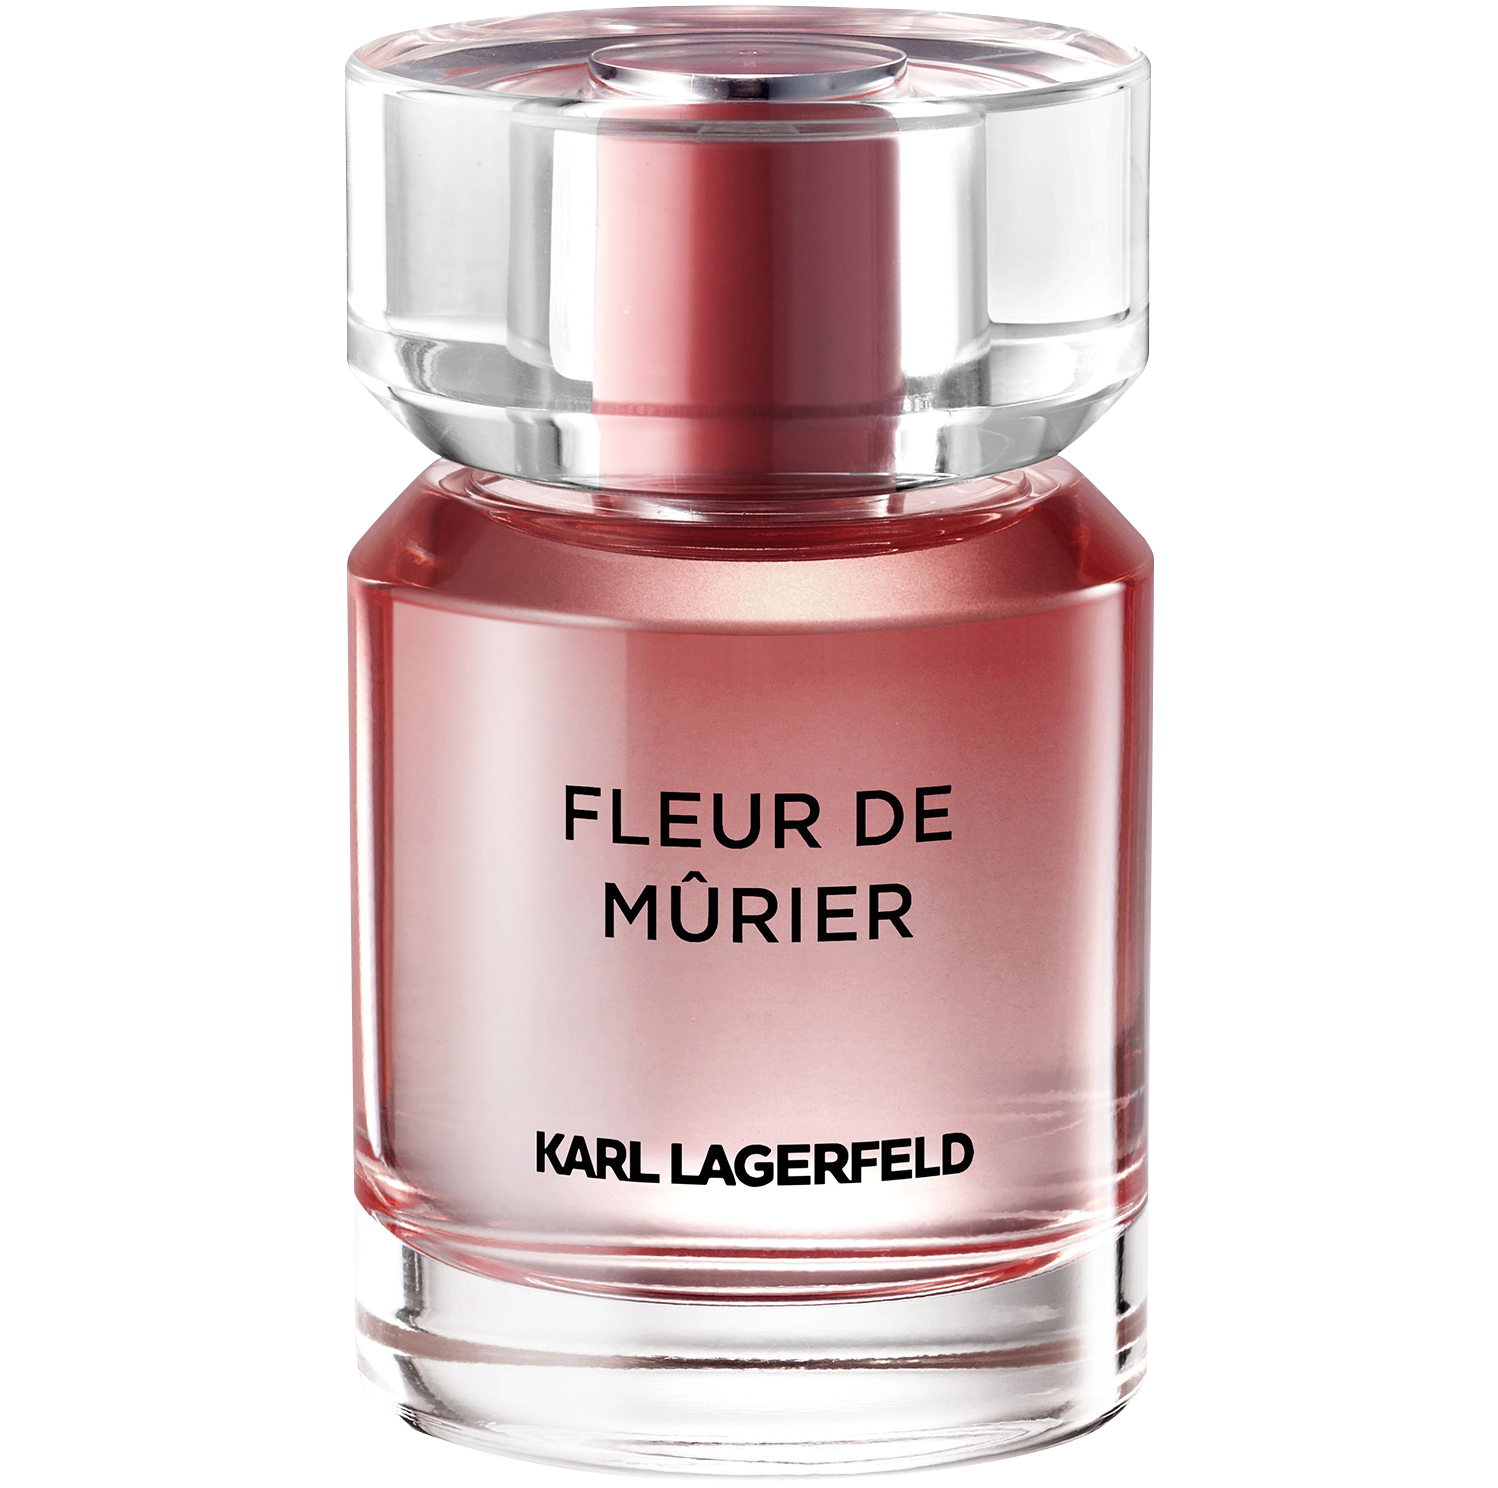 Karl Lagerfeld woda perfumowana damska 50ml Fleur de Murier | hebe.pl